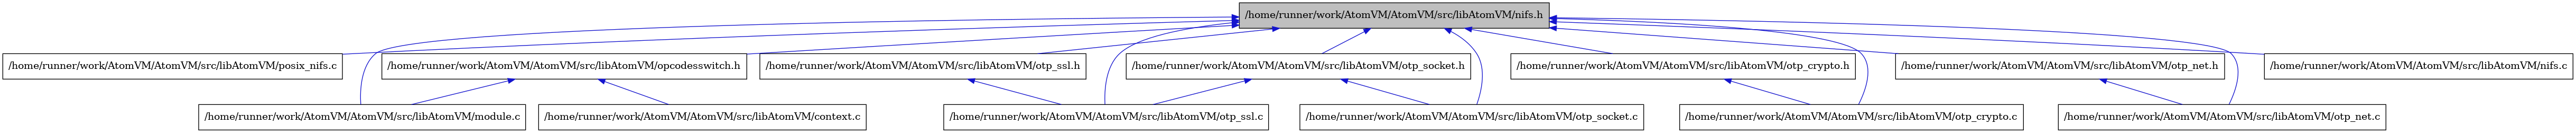 digraph {
    graph [bgcolor="#00000000"]
    node [shape=rectangle style=filled fillcolor="#FFFFFF" font=Helvetica padding=2]
    edge [color="#1414CE"]
    "14" [label="/home/runner/work/AtomVM/AtomVM/src/libAtomVM/posix_nifs.c" tooltip="/home/runner/work/AtomVM/AtomVM/src/libAtomVM/posix_nifs.c"]
    "5" [label="/home/runner/work/AtomVM/AtomVM/src/libAtomVM/context.c" tooltip="/home/runner/work/AtomVM/AtomVM/src/libAtomVM/context.c"]
    "2" [label="/home/runner/work/AtomVM/AtomVM/src/libAtomVM/module.c" tooltip="/home/runner/work/AtomVM/AtomVM/src/libAtomVM/module.c"]
    "12" [label="/home/runner/work/AtomVM/AtomVM/src/libAtomVM/otp_ssl.c" tooltip="/home/runner/work/AtomVM/AtomVM/src/libAtomVM/otp_ssl.c"]
    "13" [label="/home/runner/work/AtomVM/AtomVM/src/libAtomVM/otp_ssl.h" tooltip="/home/runner/work/AtomVM/AtomVM/src/libAtomVM/otp_ssl.h"]
    "6" [label="/home/runner/work/AtomVM/AtomVM/src/libAtomVM/otp_crypto.c" tooltip="/home/runner/work/AtomVM/AtomVM/src/libAtomVM/otp_crypto.c"]
    "7" [label="/home/runner/work/AtomVM/AtomVM/src/libAtomVM/otp_crypto.h" tooltip="/home/runner/work/AtomVM/AtomVM/src/libAtomVM/otp_crypto.h"]
    "8" [label="/home/runner/work/AtomVM/AtomVM/src/libAtomVM/otp_net.c" tooltip="/home/runner/work/AtomVM/AtomVM/src/libAtomVM/otp_net.c"]
    "9" [label="/home/runner/work/AtomVM/AtomVM/src/libAtomVM/otp_net.h" tooltip="/home/runner/work/AtomVM/AtomVM/src/libAtomVM/otp_net.h"]
    "3" [label="/home/runner/work/AtomVM/AtomVM/src/libAtomVM/nifs.c" tooltip="/home/runner/work/AtomVM/AtomVM/src/libAtomVM/nifs.c"]
    "1" [label="/home/runner/work/AtomVM/AtomVM/src/libAtomVM/nifs.h" tooltip="/home/runner/work/AtomVM/AtomVM/src/libAtomVM/nifs.h" fillcolor="#BFBFBF"]
    "4" [label="/home/runner/work/AtomVM/AtomVM/src/libAtomVM/opcodesswitch.h" tooltip="/home/runner/work/AtomVM/AtomVM/src/libAtomVM/opcodesswitch.h"]
    "10" [label="/home/runner/work/AtomVM/AtomVM/src/libAtomVM/otp_socket.c" tooltip="/home/runner/work/AtomVM/AtomVM/src/libAtomVM/otp_socket.c"]
    "11" [label="/home/runner/work/AtomVM/AtomVM/src/libAtomVM/otp_socket.h" tooltip="/home/runner/work/AtomVM/AtomVM/src/libAtomVM/otp_socket.h"]
    "13" -> "12" [dir=back tooltip="include"]
    "7" -> "6" [dir=back tooltip="include"]
    "9" -> "8" [dir=back tooltip="include"]
    "1" -> "2" [dir=back tooltip="include"]
    "1" -> "3" [dir=back tooltip="include"]
    "1" -> "4" [dir=back tooltip="include"]
    "1" -> "6" [dir=back tooltip="include"]
    "1" -> "7" [dir=back tooltip="include"]
    "1" -> "8" [dir=back tooltip="include"]
    "1" -> "9" [dir=back tooltip="include"]
    "1" -> "10" [dir=back tooltip="include"]
    "1" -> "11" [dir=back tooltip="include"]
    "1" -> "12" [dir=back tooltip="include"]
    "1" -> "13" [dir=back tooltip="include"]
    "1" -> "14" [dir=back tooltip="include"]
    "4" -> "5" [dir=back tooltip="include"]
    "4" -> "2" [dir=back tooltip="include"]
    "11" -> "10" [dir=back tooltip="include"]
    "11" -> "12" [dir=back tooltip="include"]
}